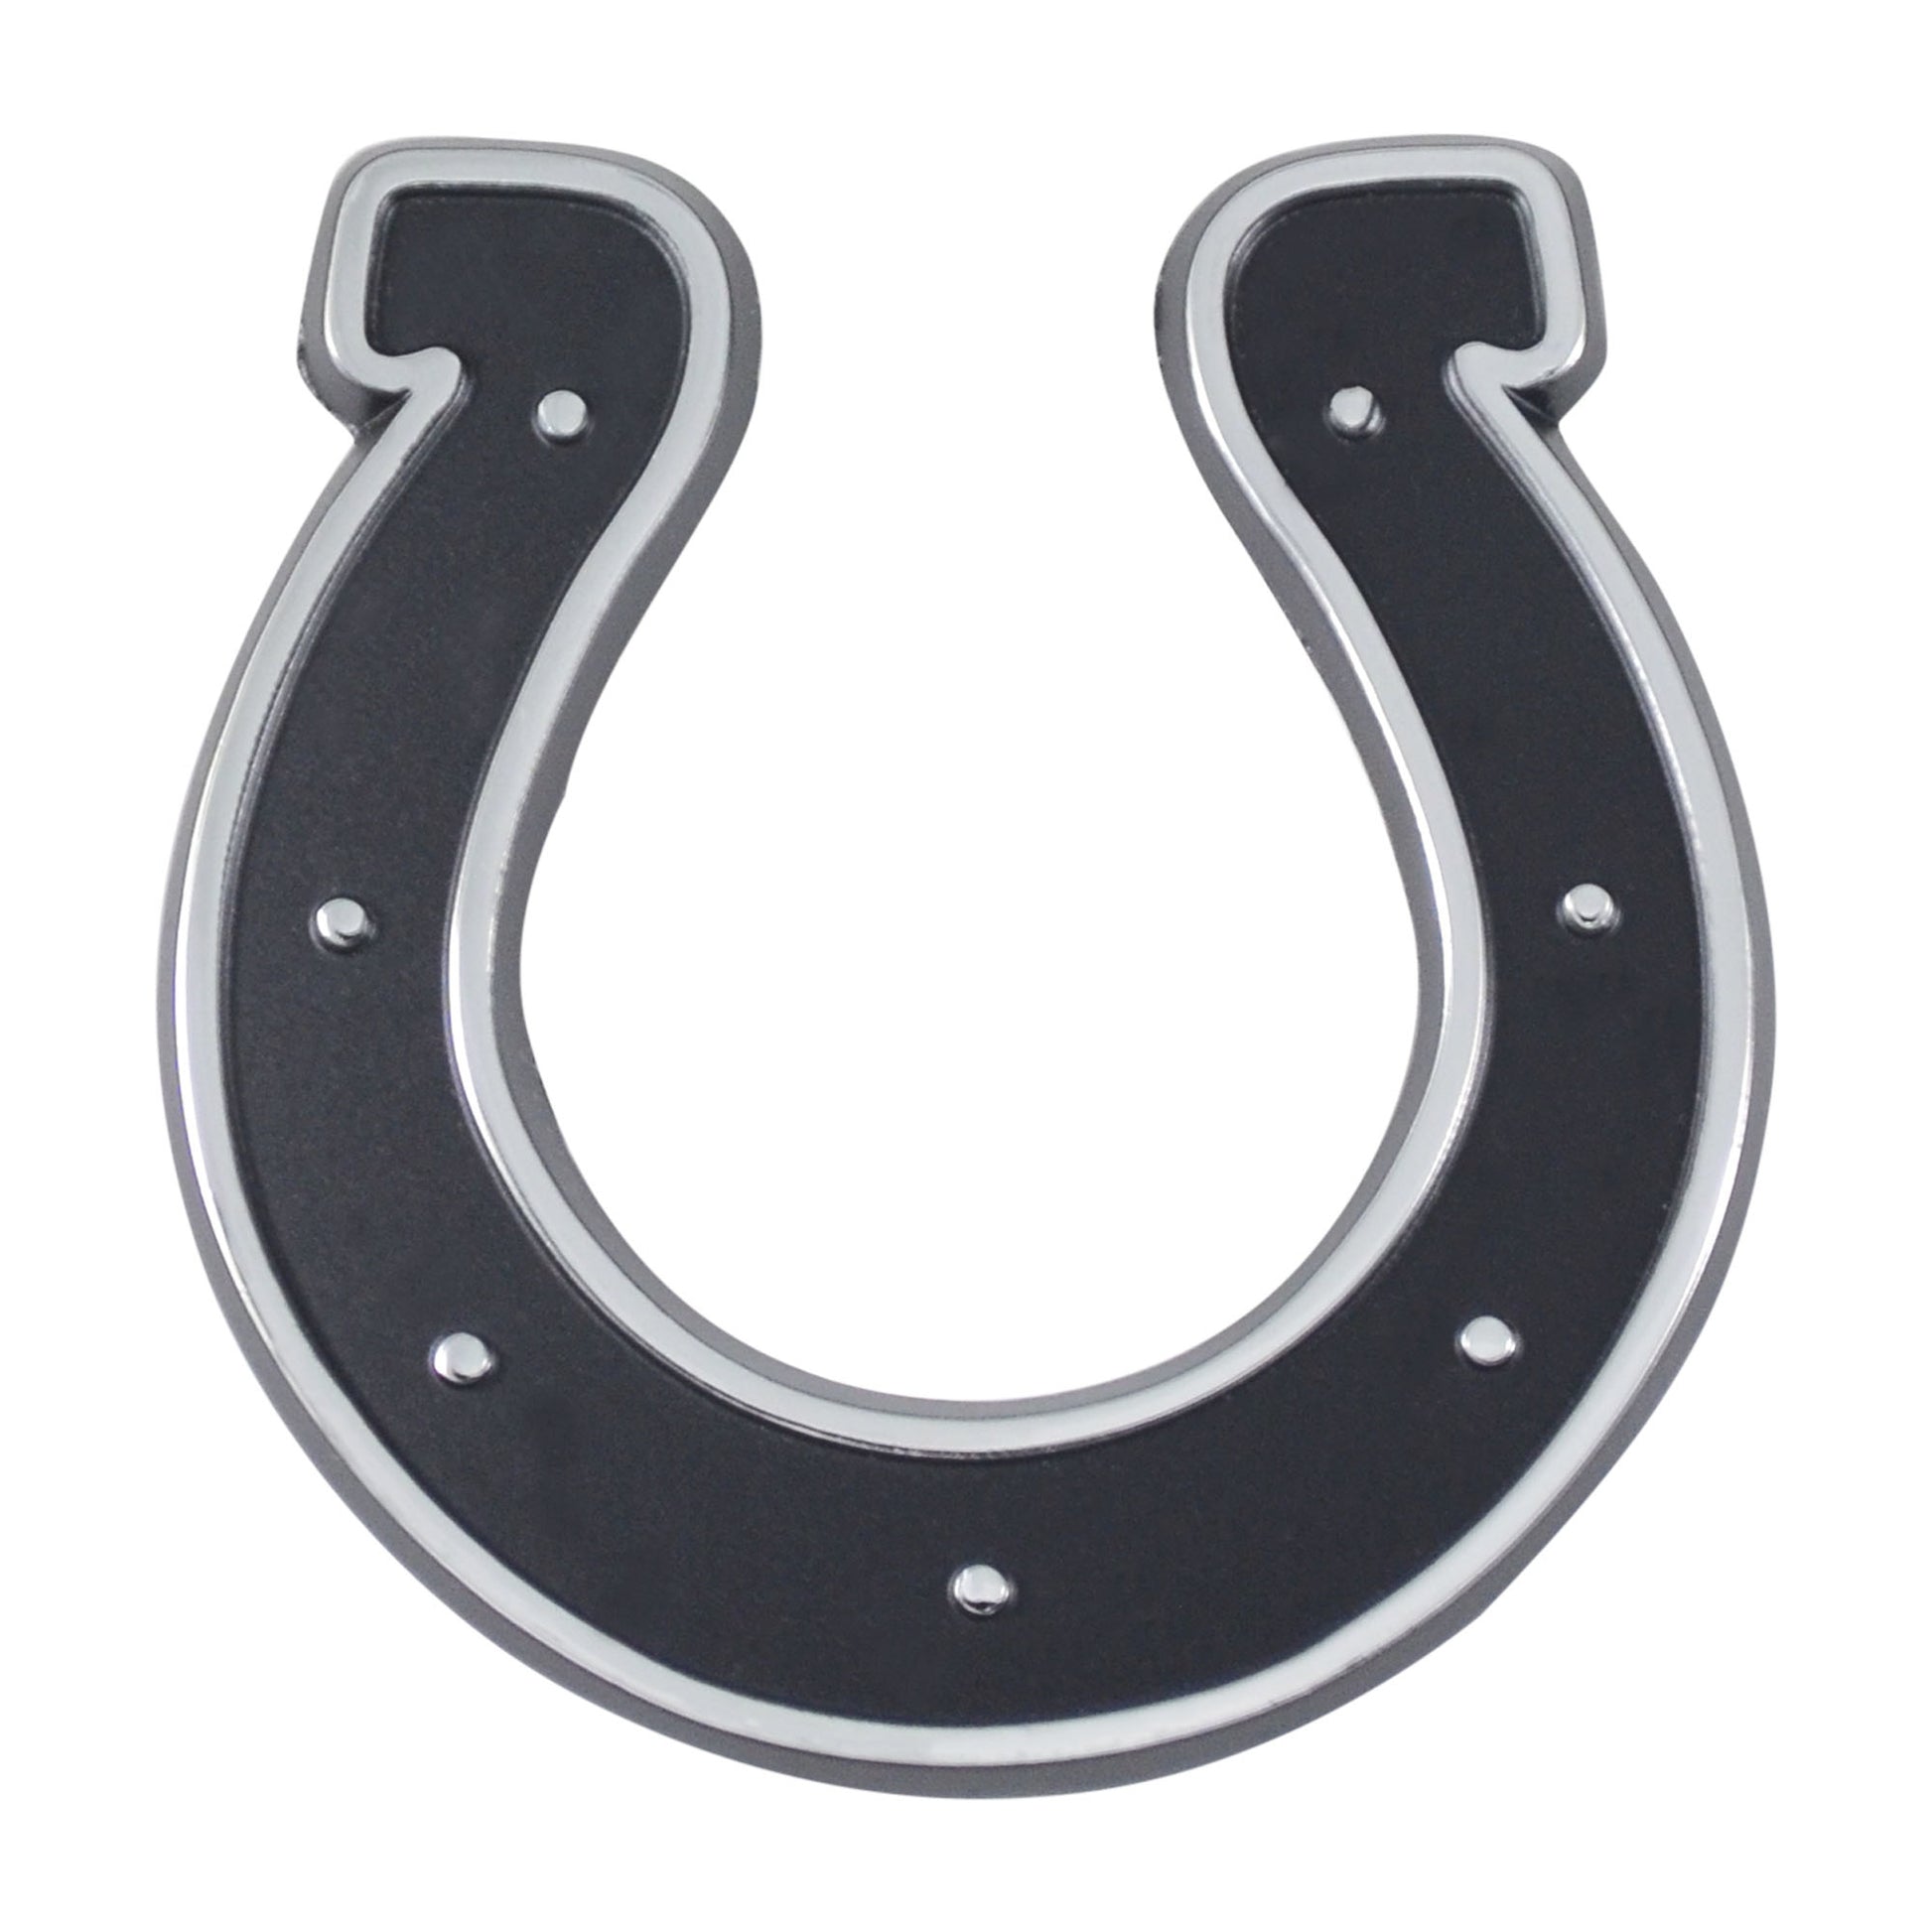 Indianapolis Colts Premium Solid Metal Chrome Plated Car Auto Emblem